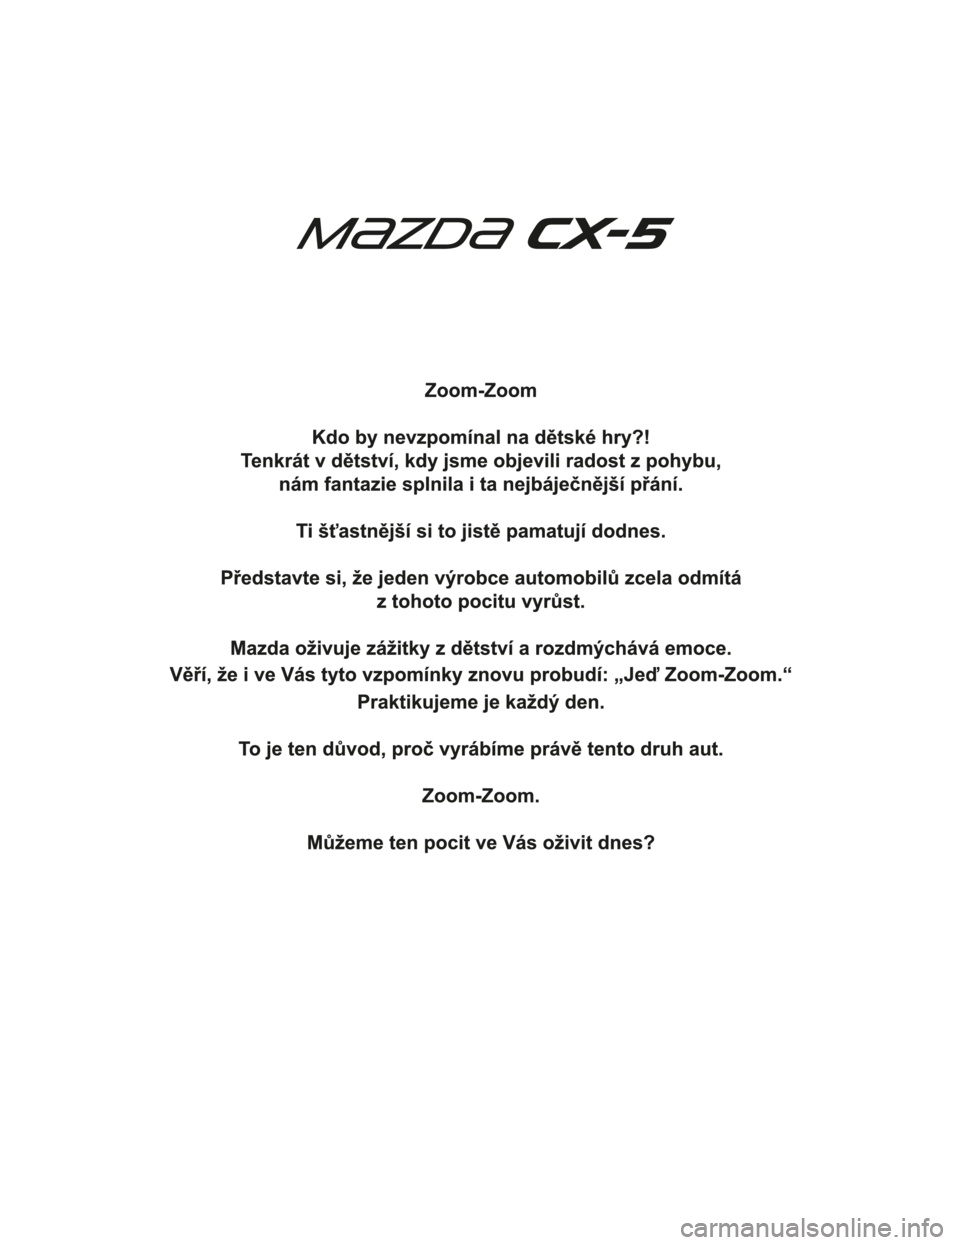 MAZDA MODEL CX-5 2019  Návod k obsluze (in Czech) CX-5_8HD5-EE-18K-CZ_Edition12019-2-8 15:06:23 